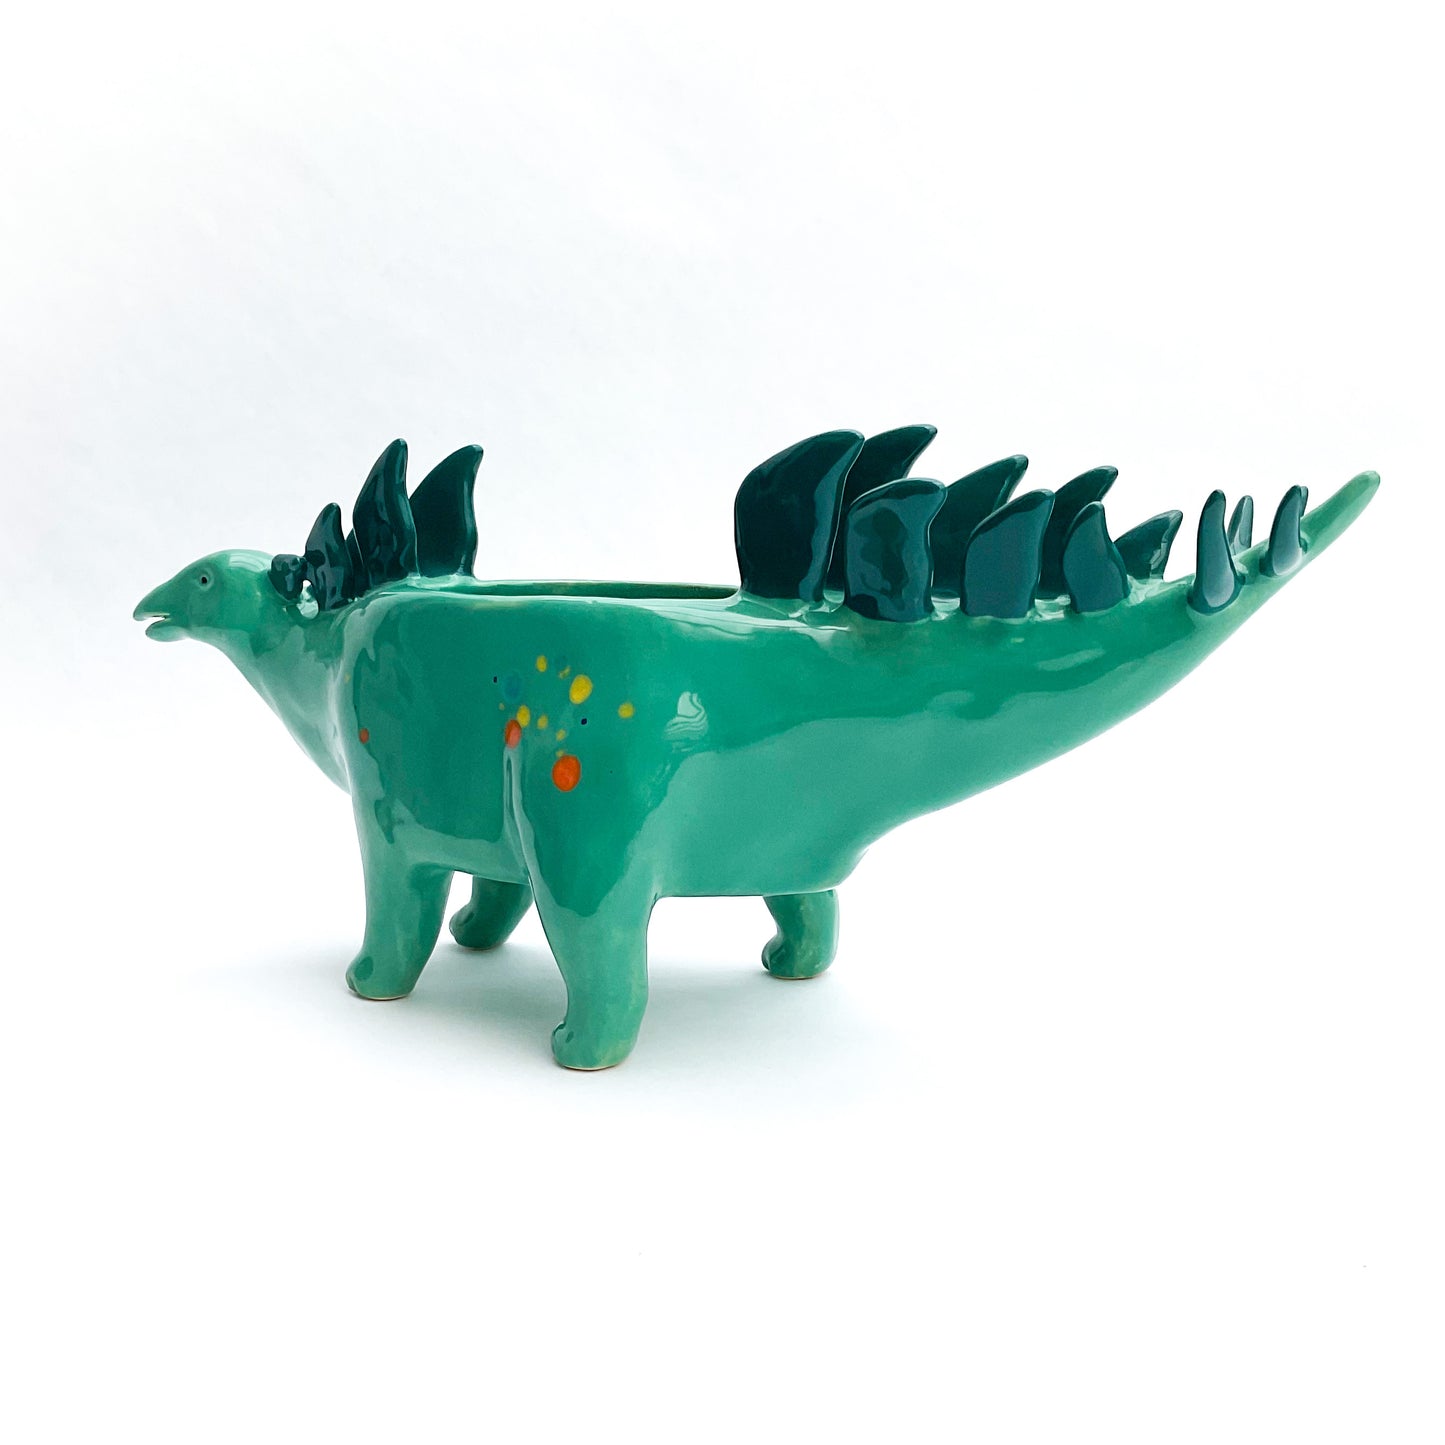 Speckled Turquoise Stegosaurus Dinosaur Planter